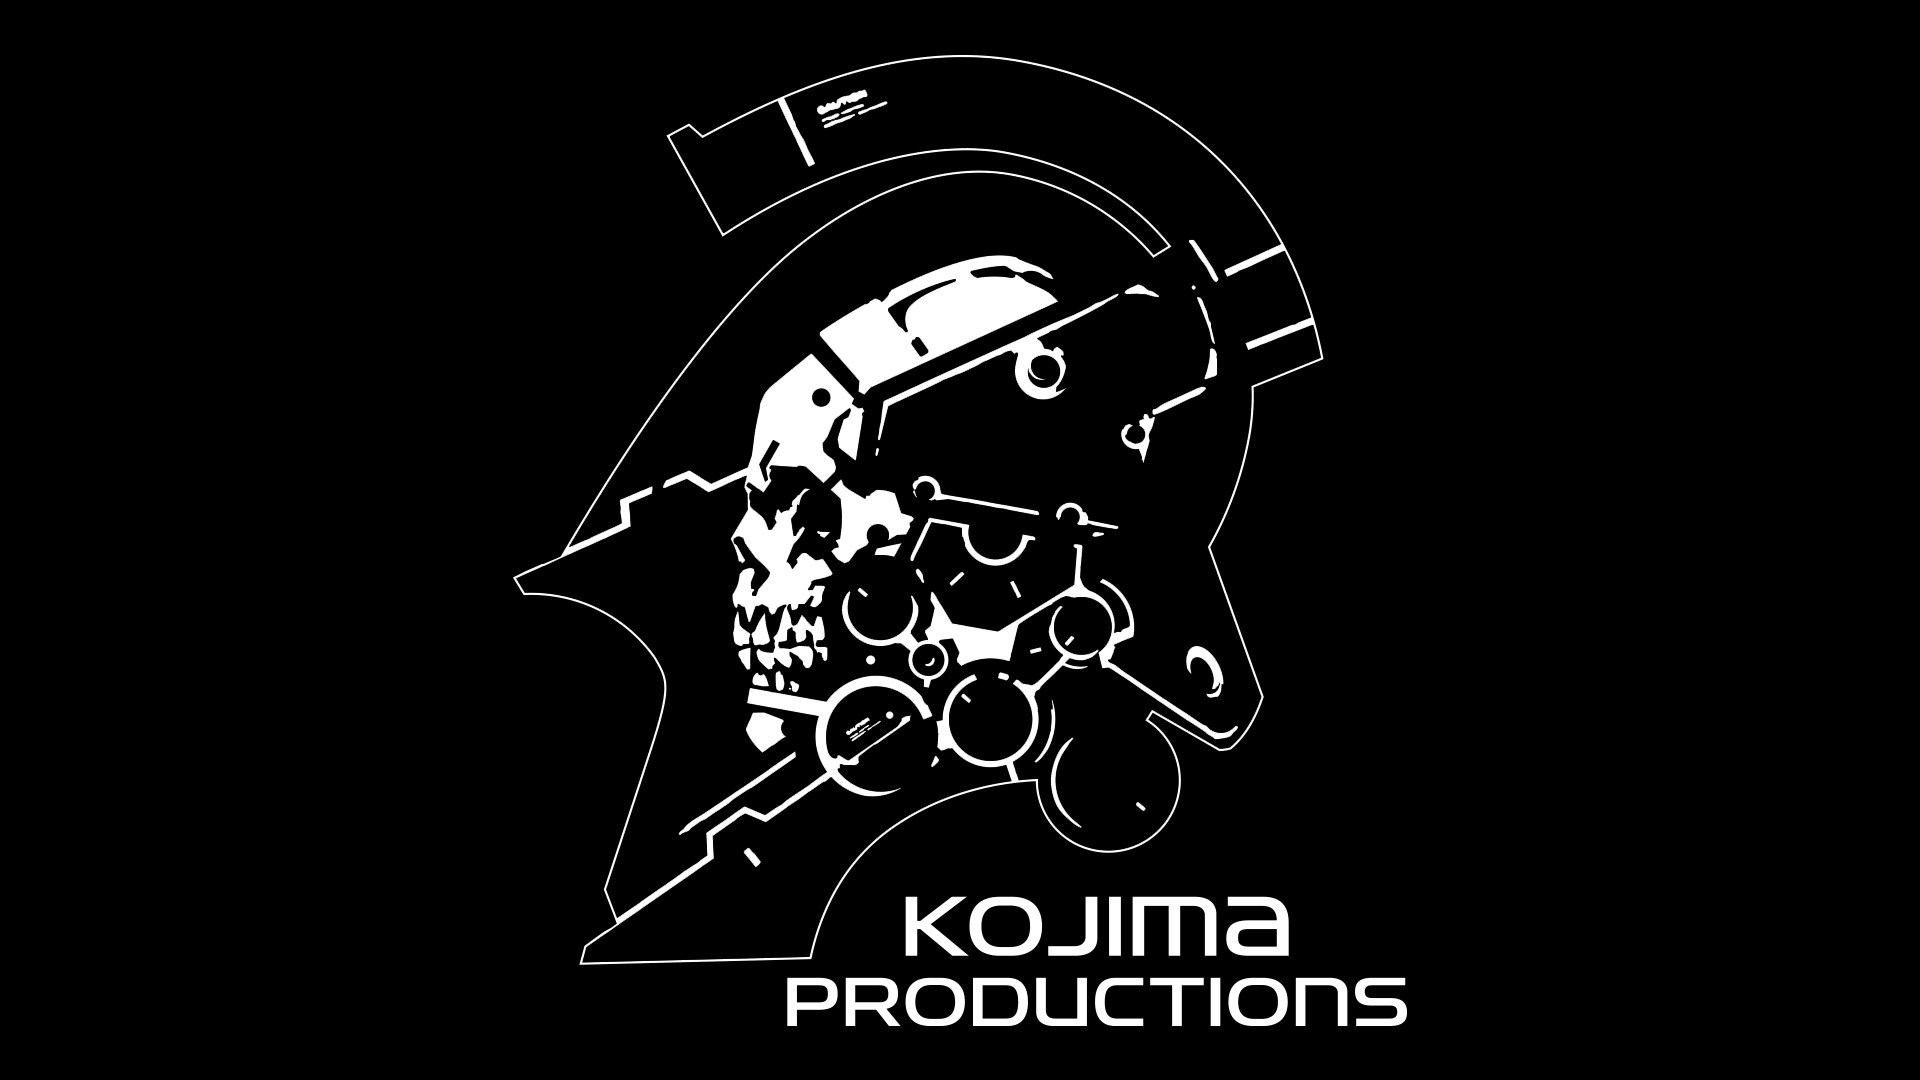 Kojima Productions film ve dizi yapmaya başlayacak